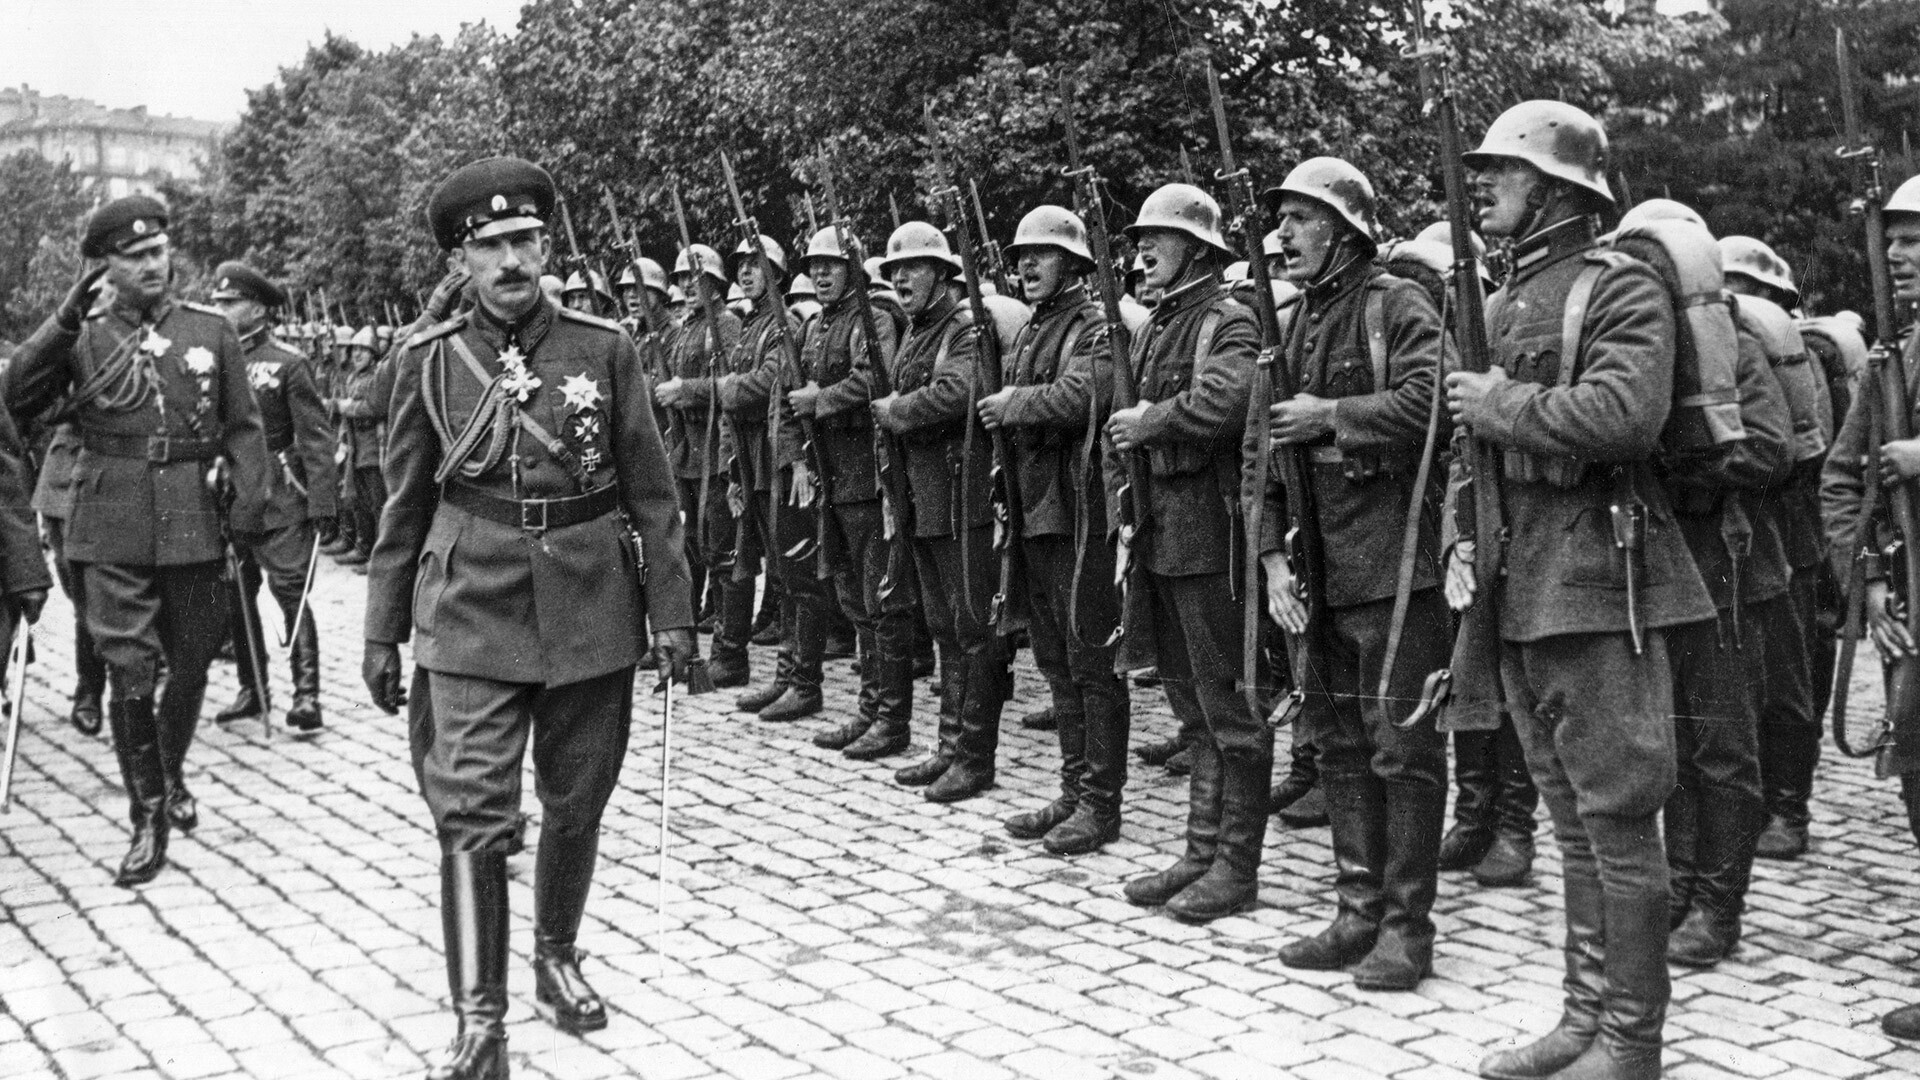 Le roi Boris III de Bulgarie inspectant ses troupes, mai 1942